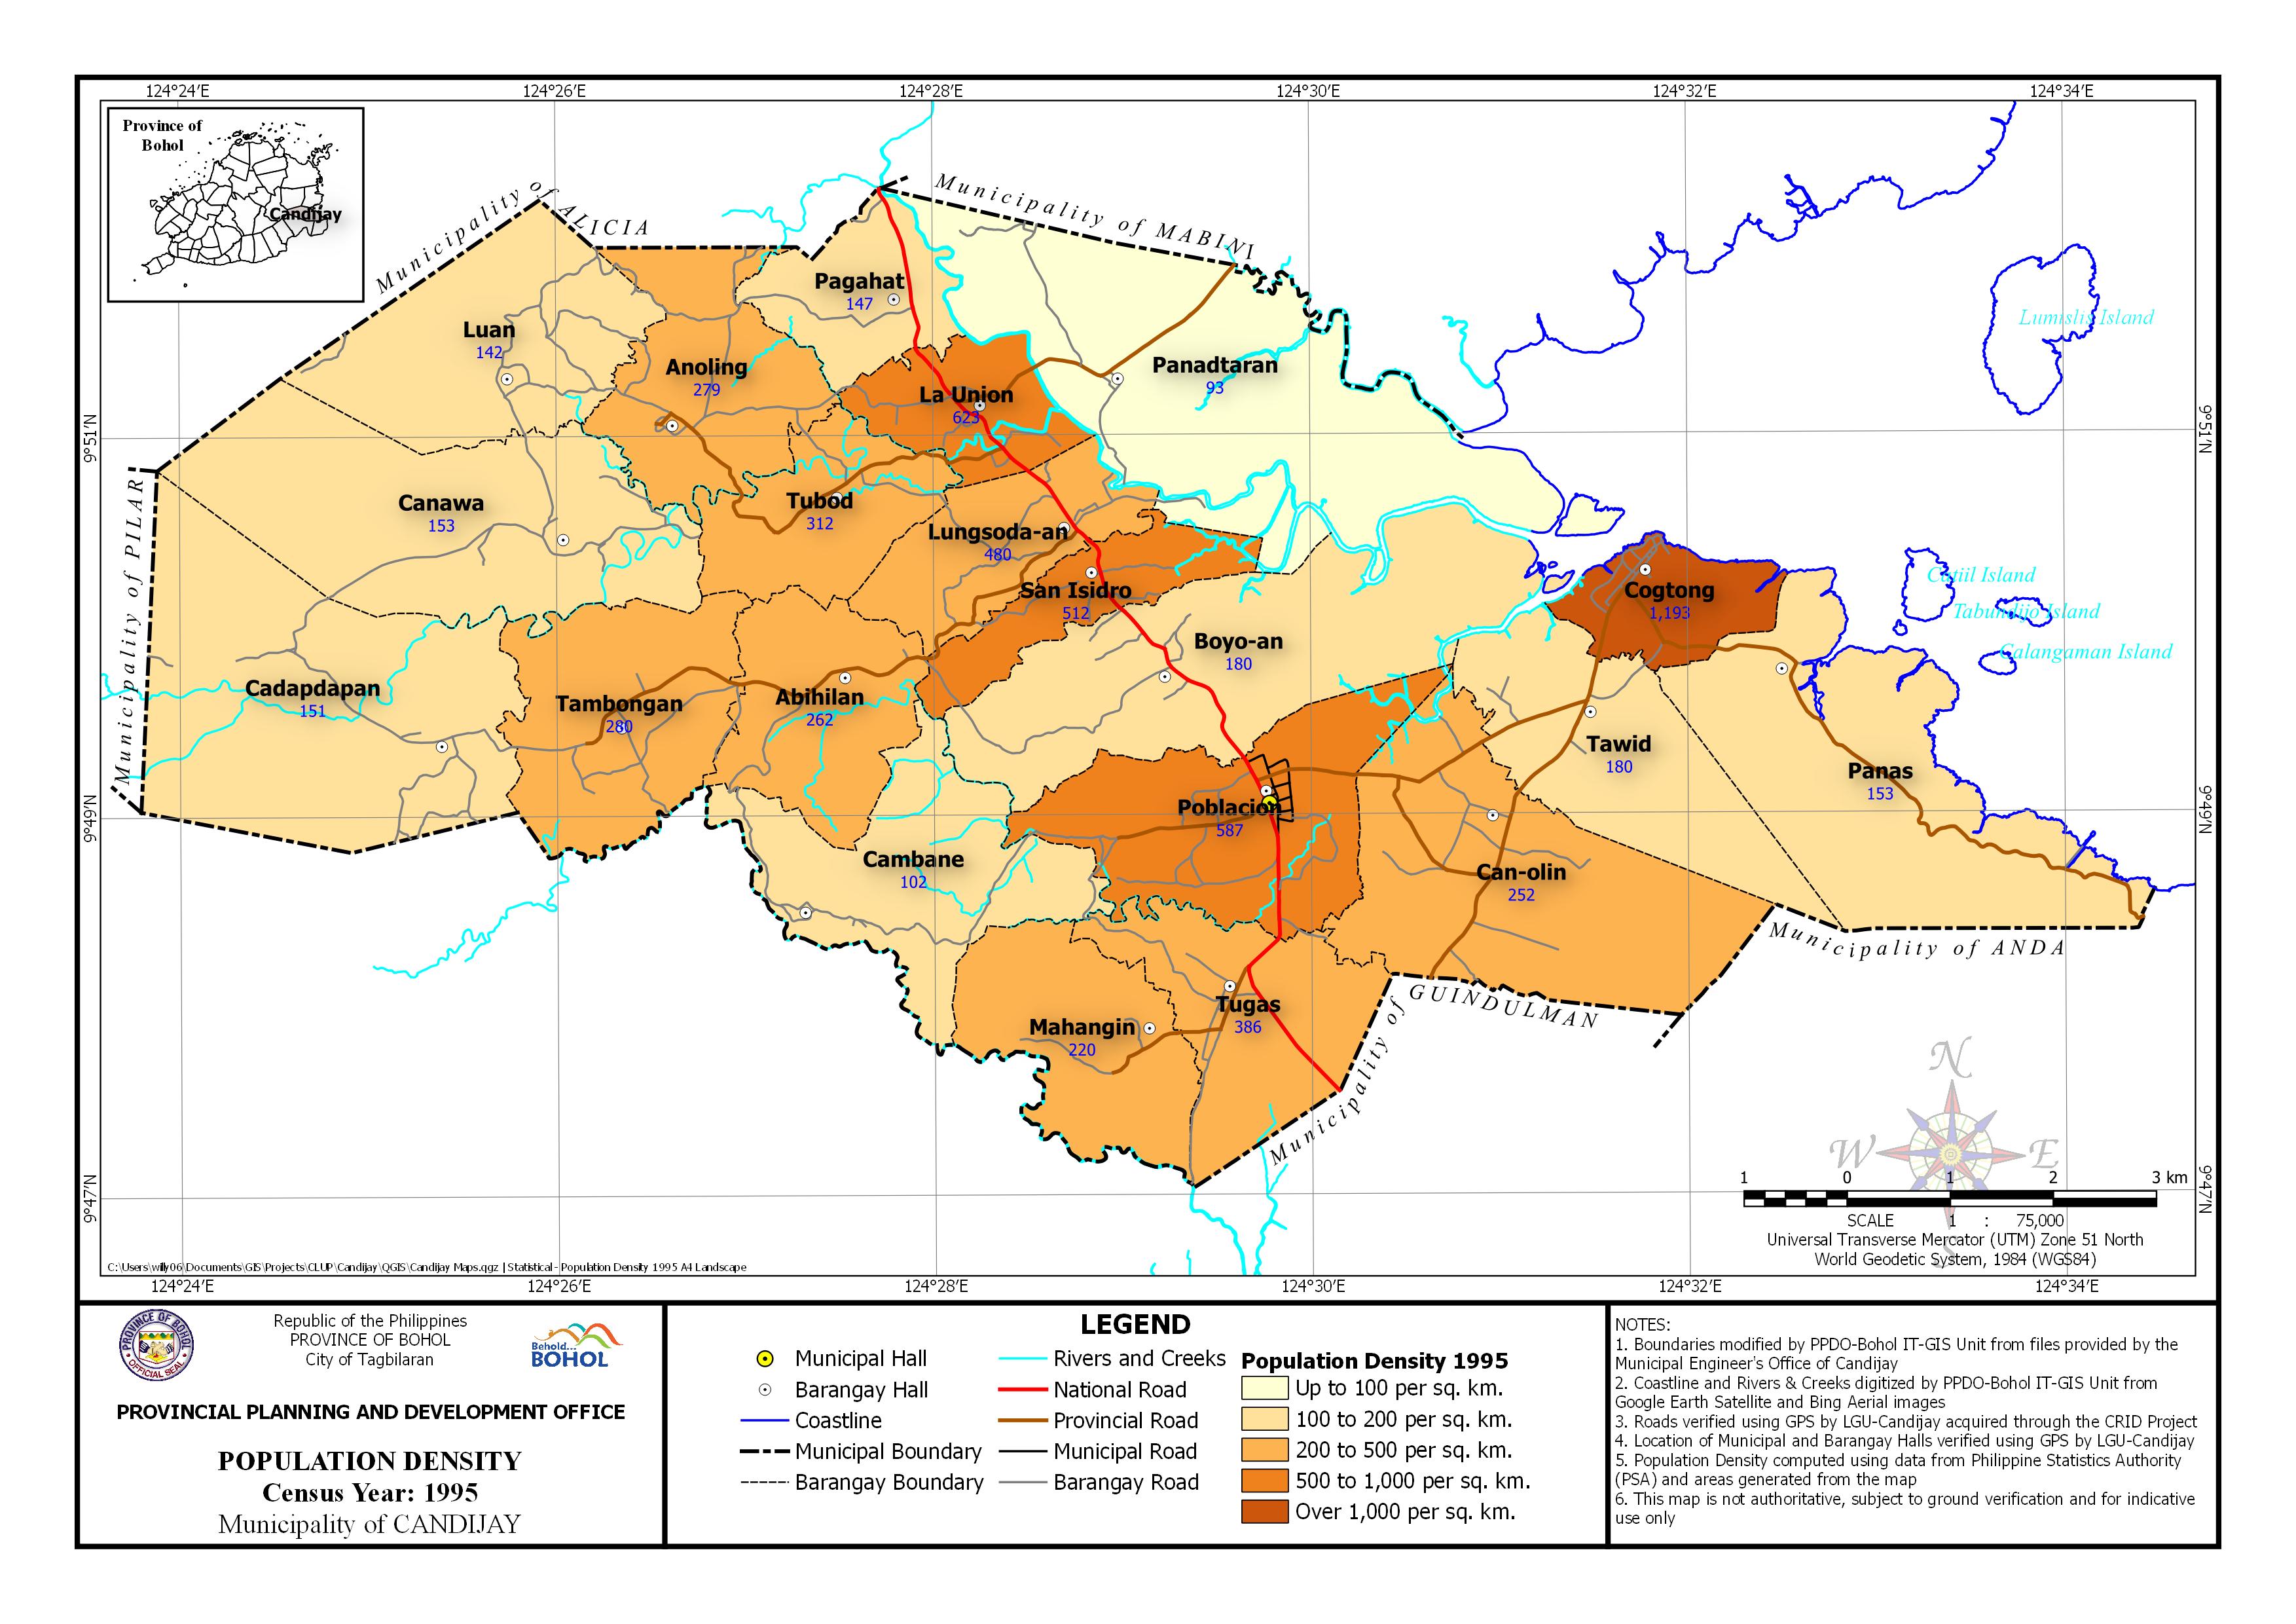 Population Density Census Year: 1995-2000